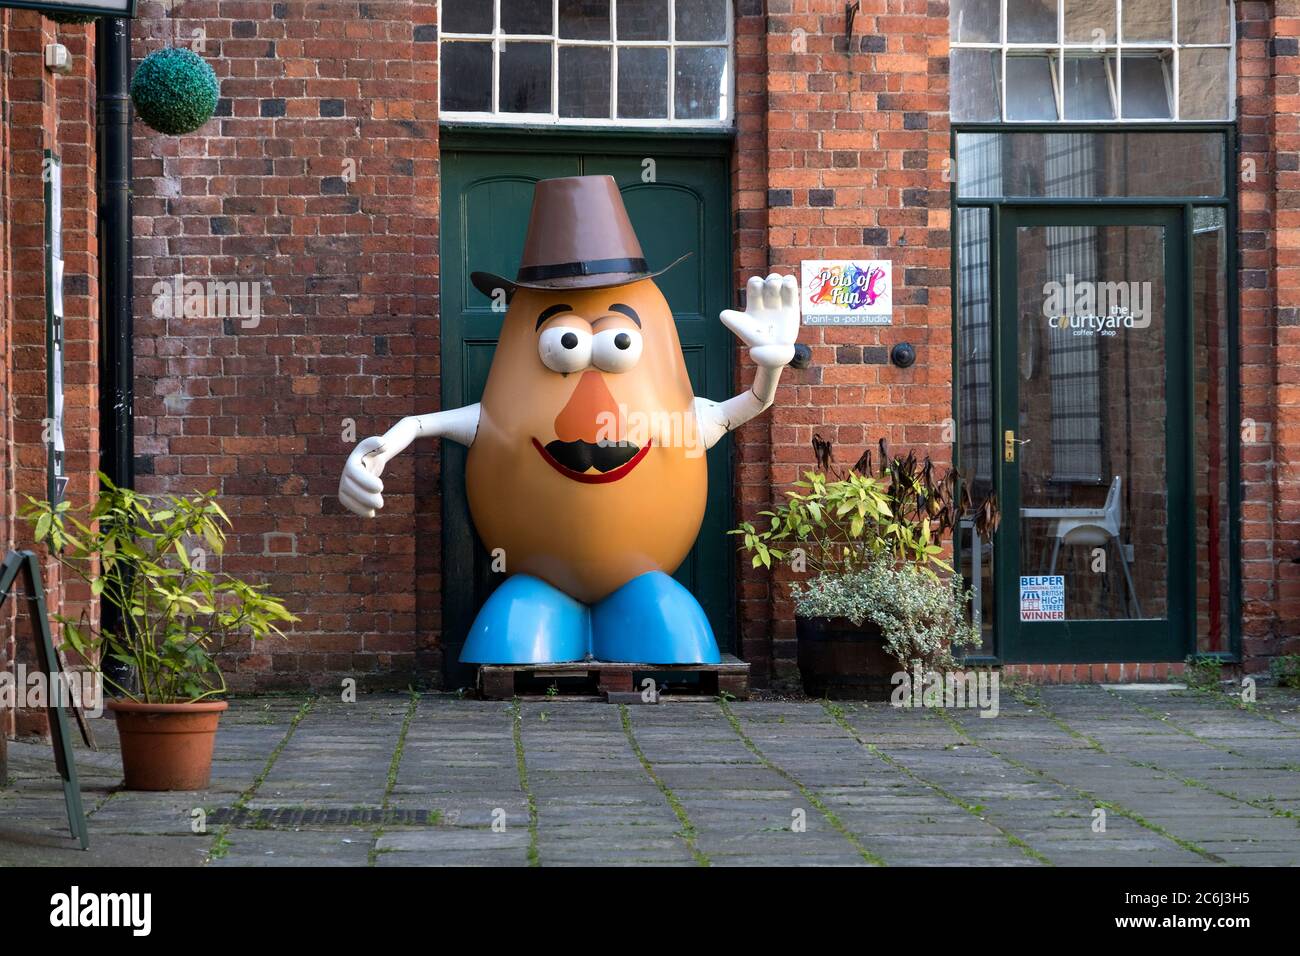 Giant Mr potato head waving Stock Photo